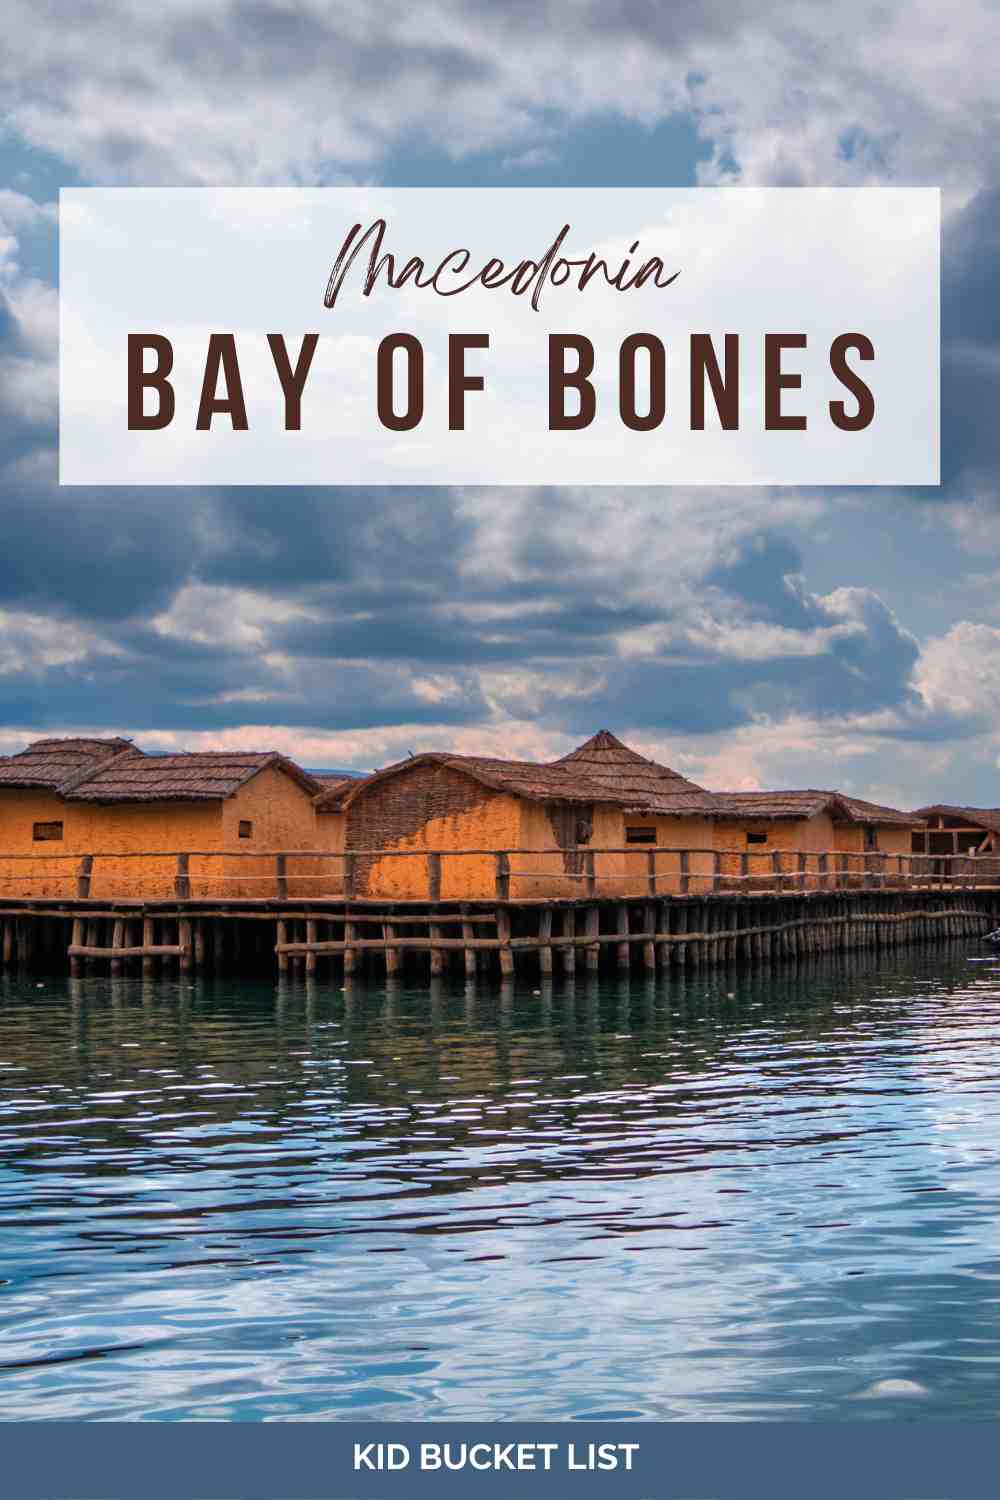 Exploring the Bay of Bones with kids in Macedonia